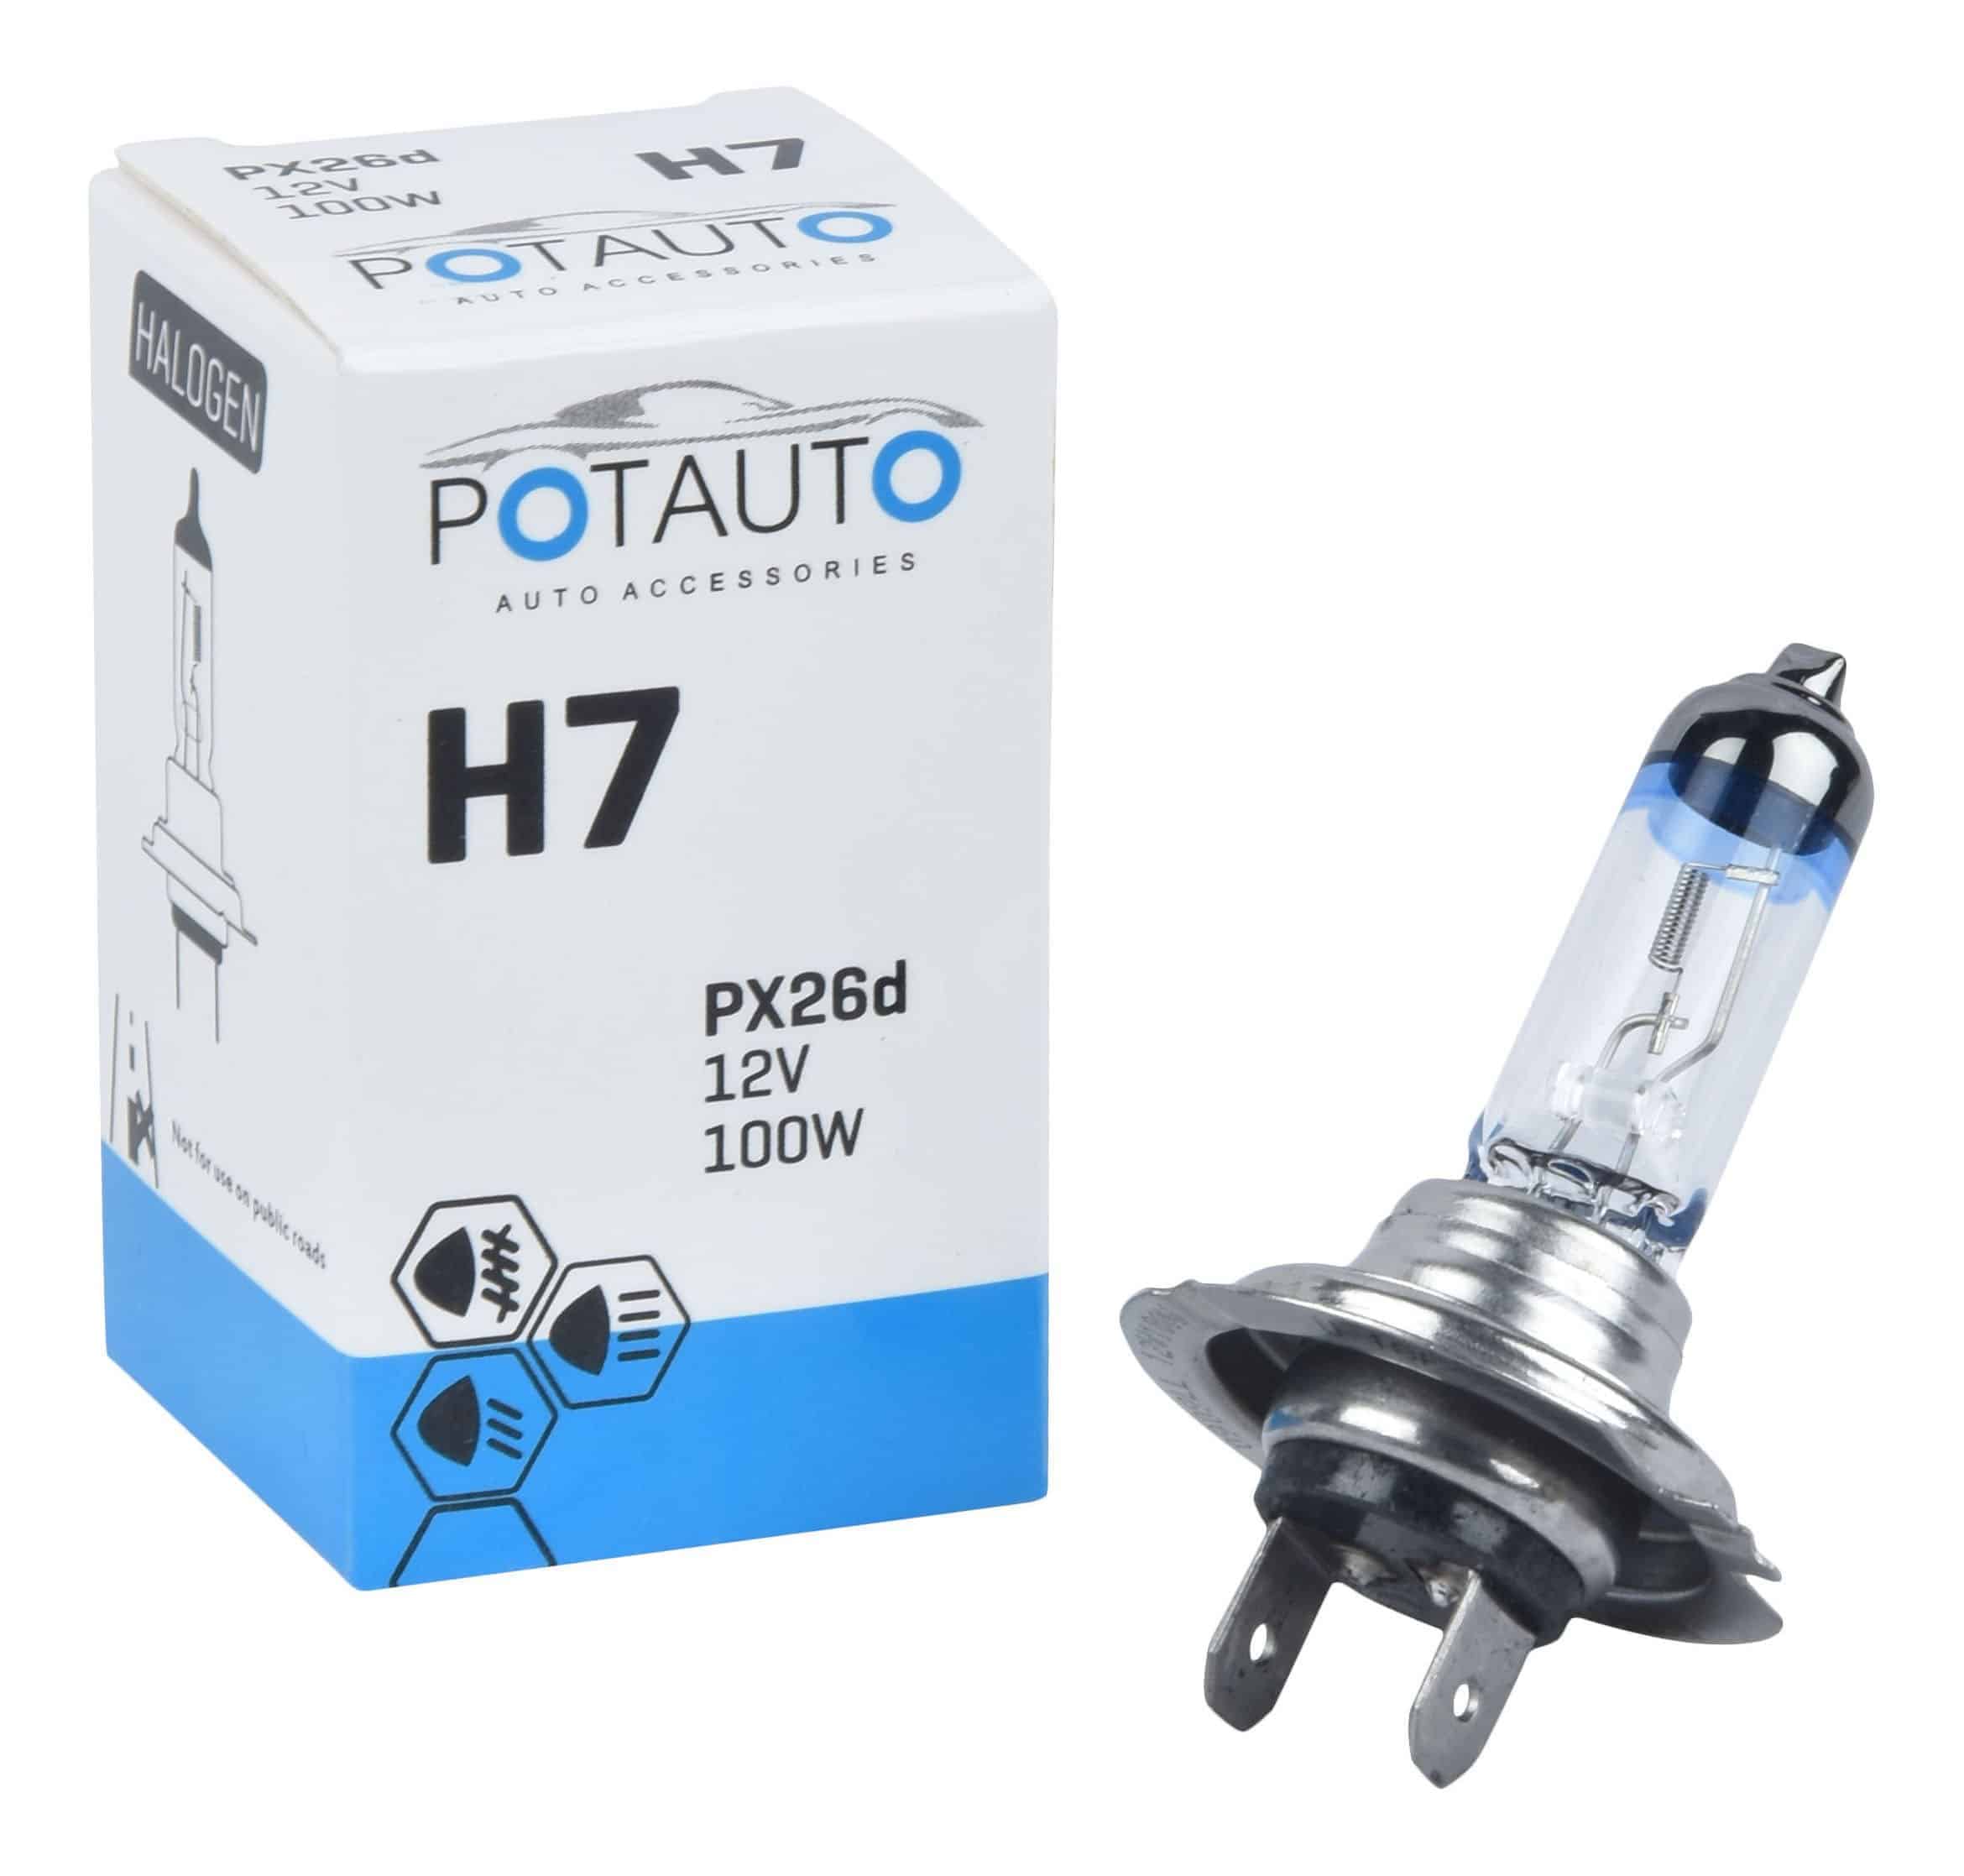 Potauto H7 Headlight Bulb PX26D 12V 100W Xtra Light